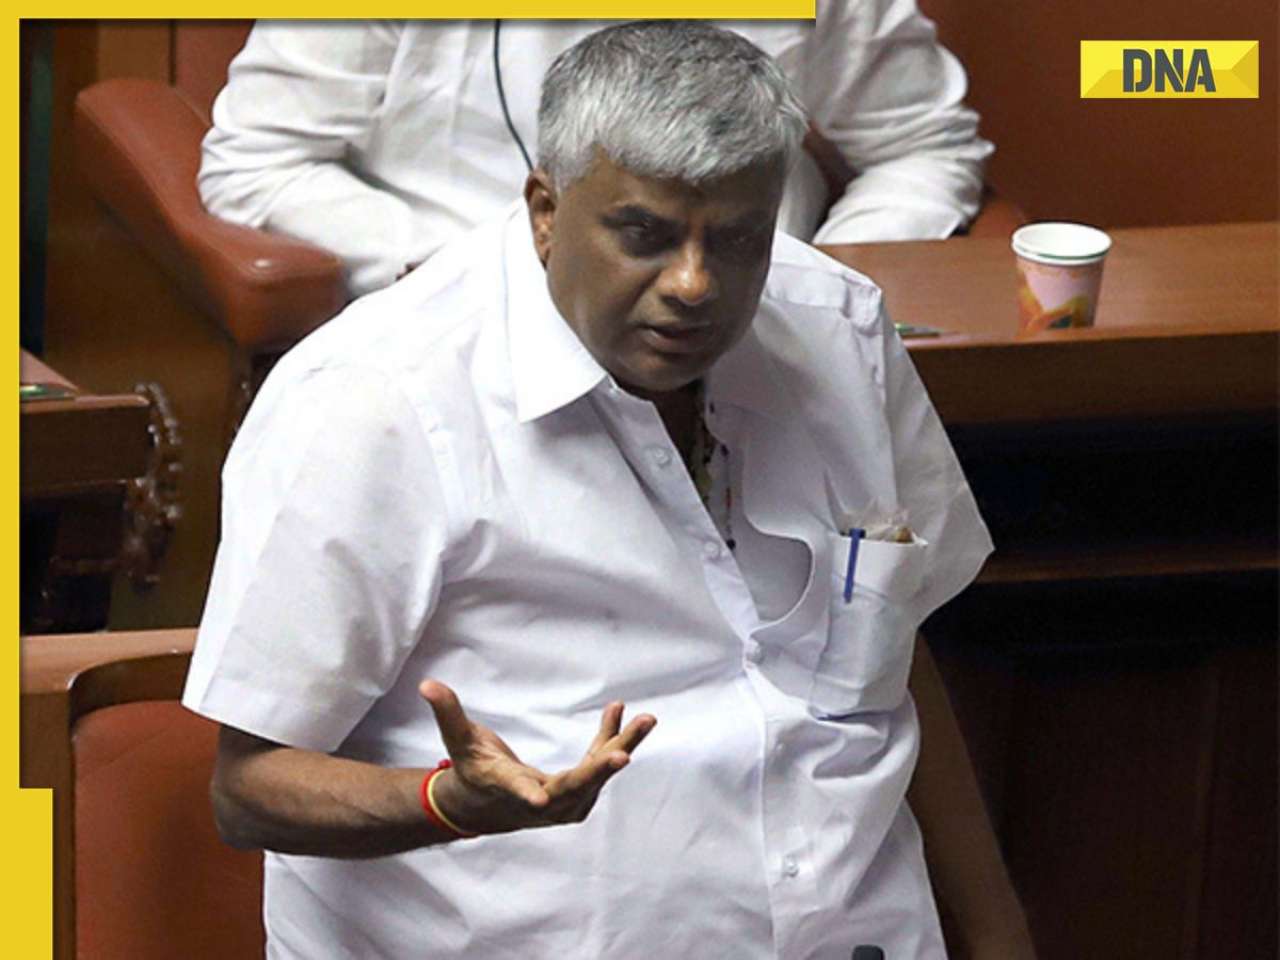 Karnataka sex scandal: JD(S) leader HD Revanna sent to SIT custody for 3 days